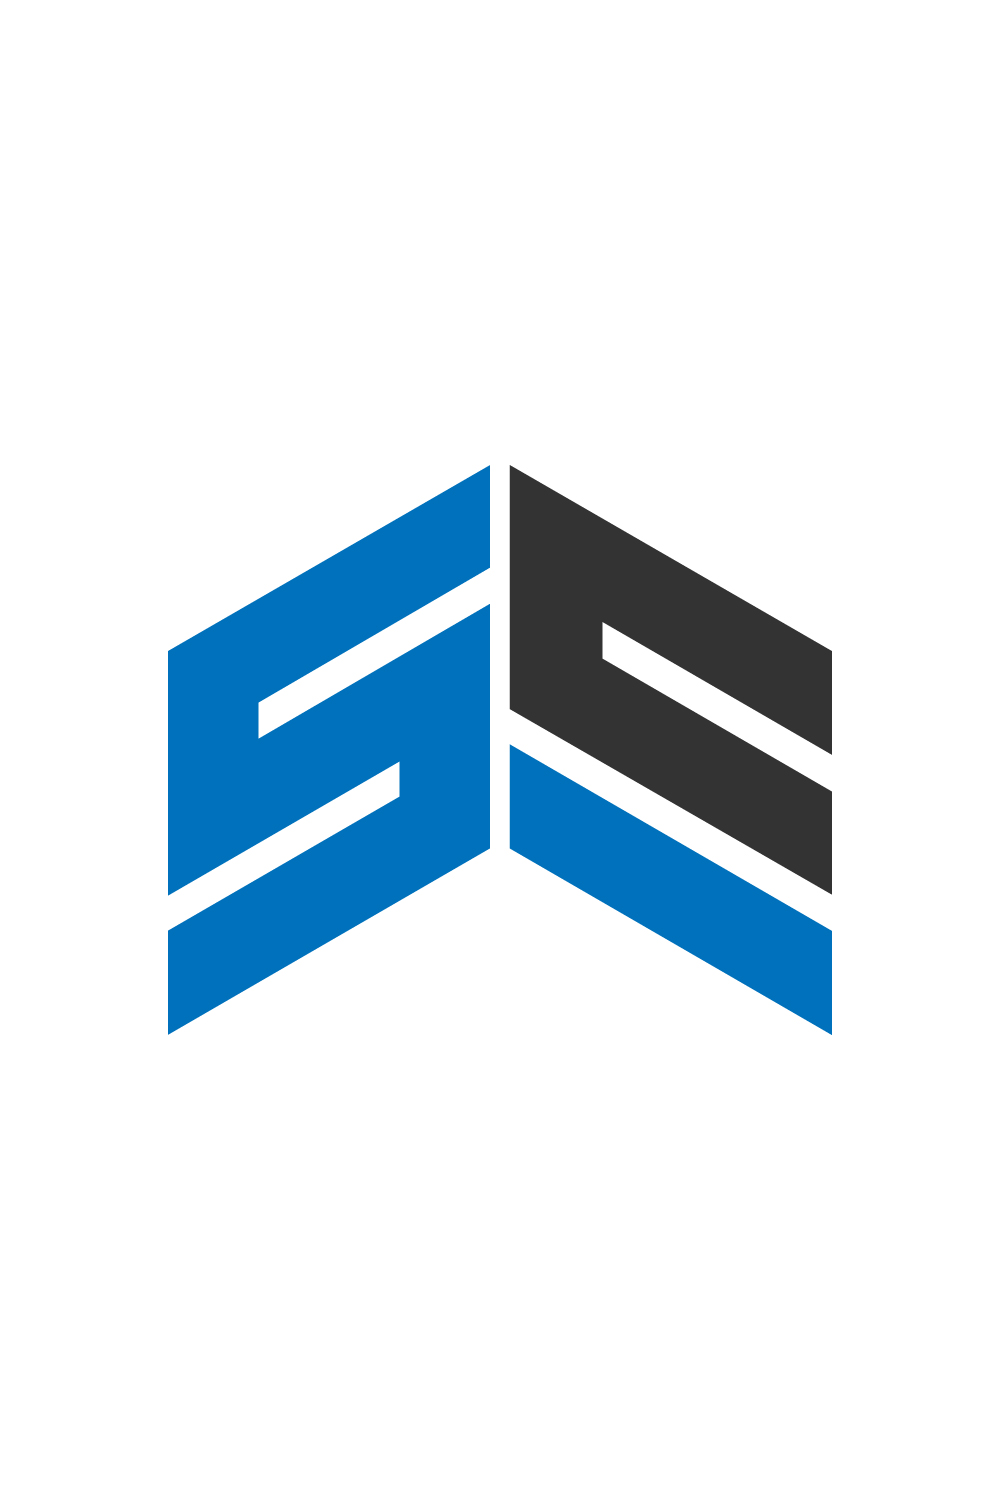 SE Letter Logo design For your Brand pinterest preview image.